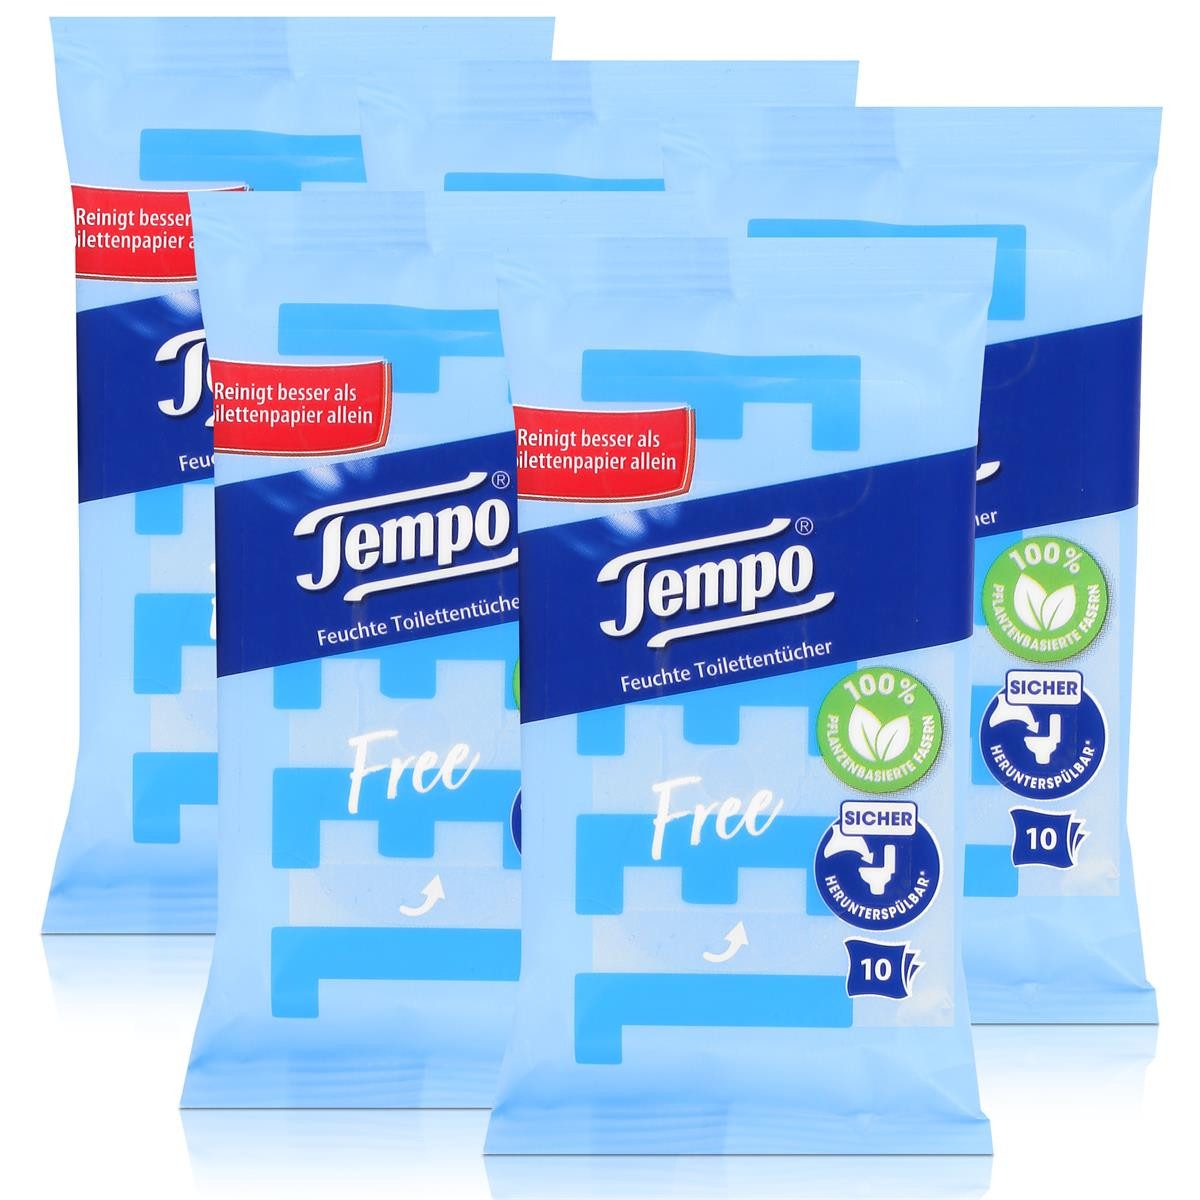 TEMPO feuchtes Toilettenpapier 5x Tempo Feuchte Toilettentücher sanft & pflegend Travelpack, mit Kami